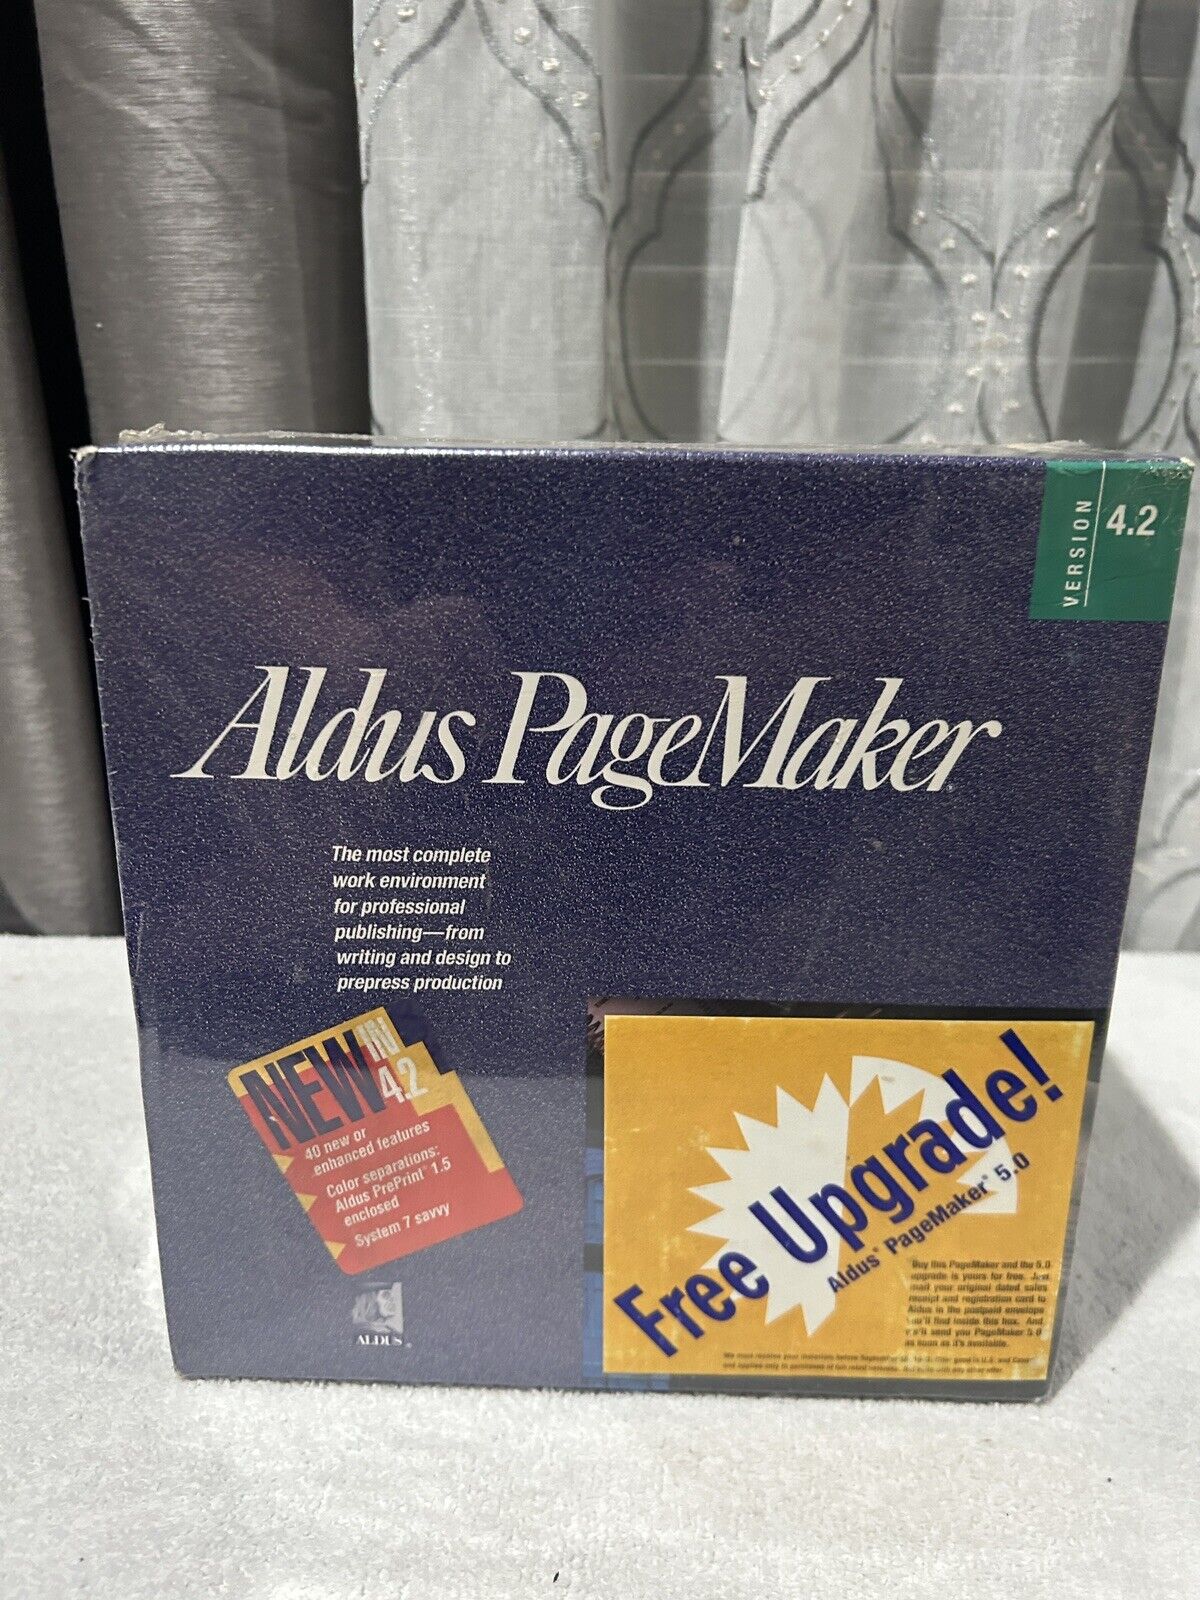 Brand New Aldus PageMaker 4.2 For Apple Macintosh 3.5” 800K Disks